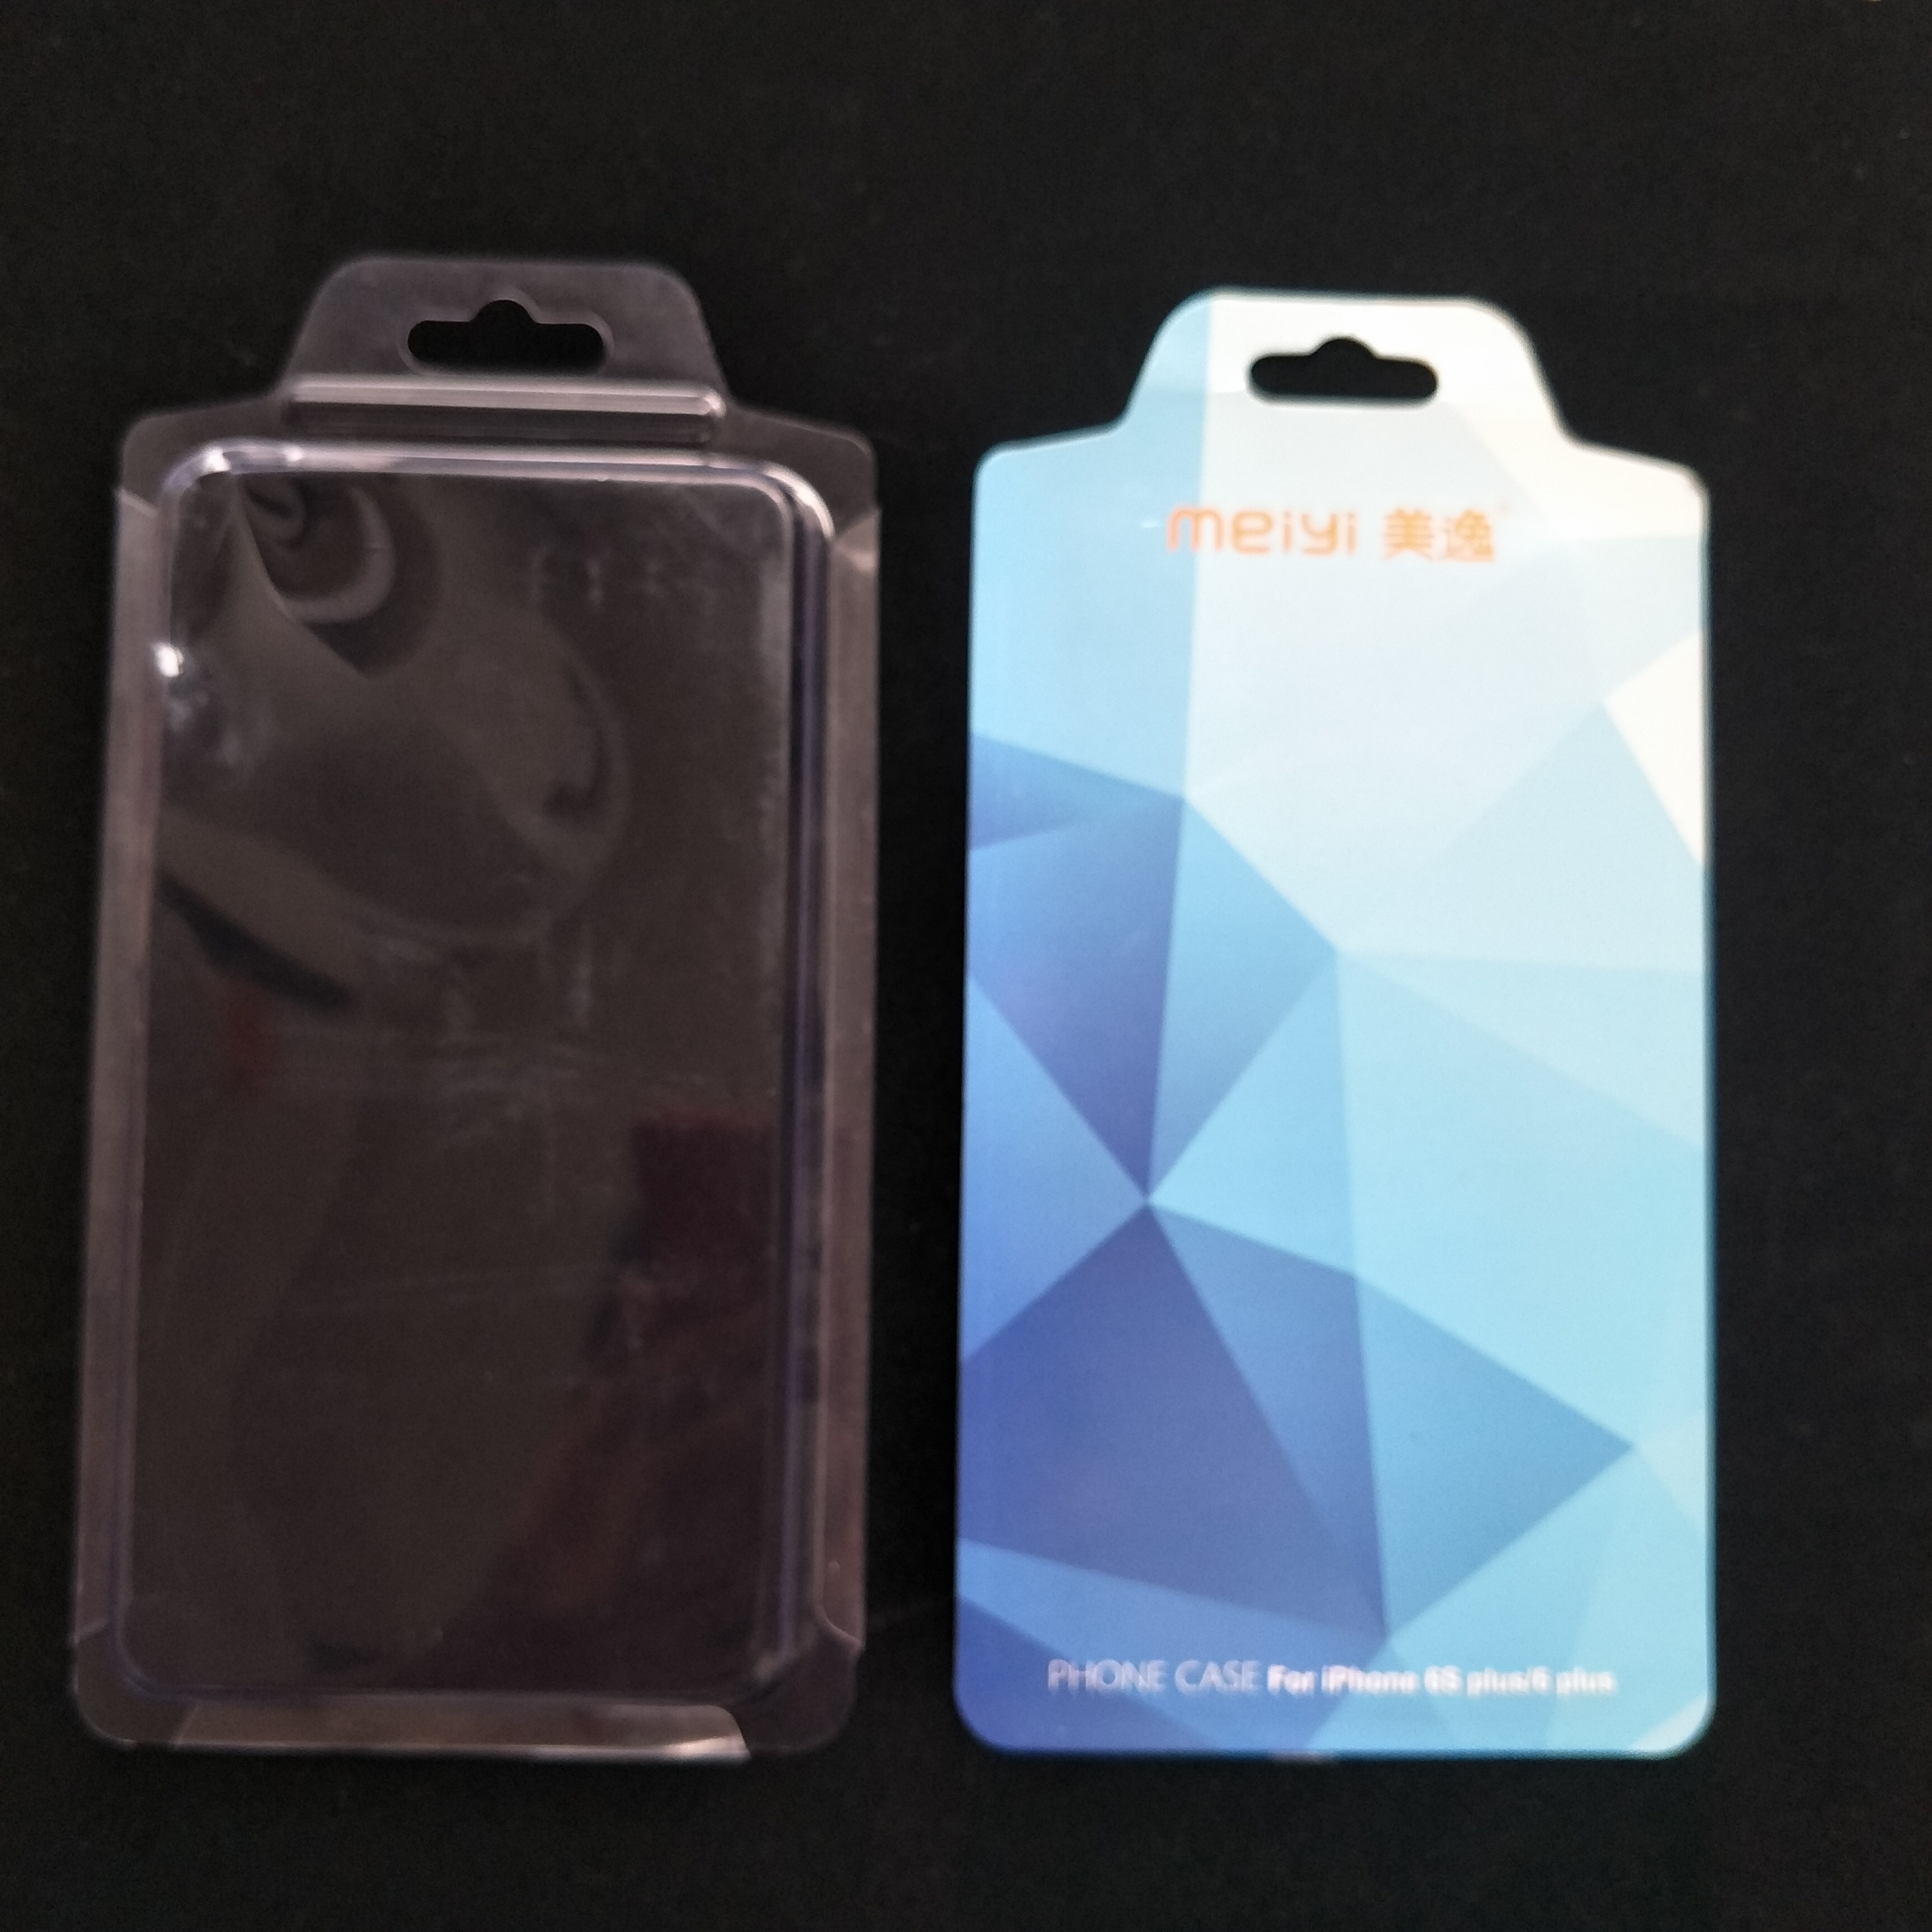 Best 0.45mm PVC Slide Blister Packaging For Mobile Phone Case RS073 wholesale